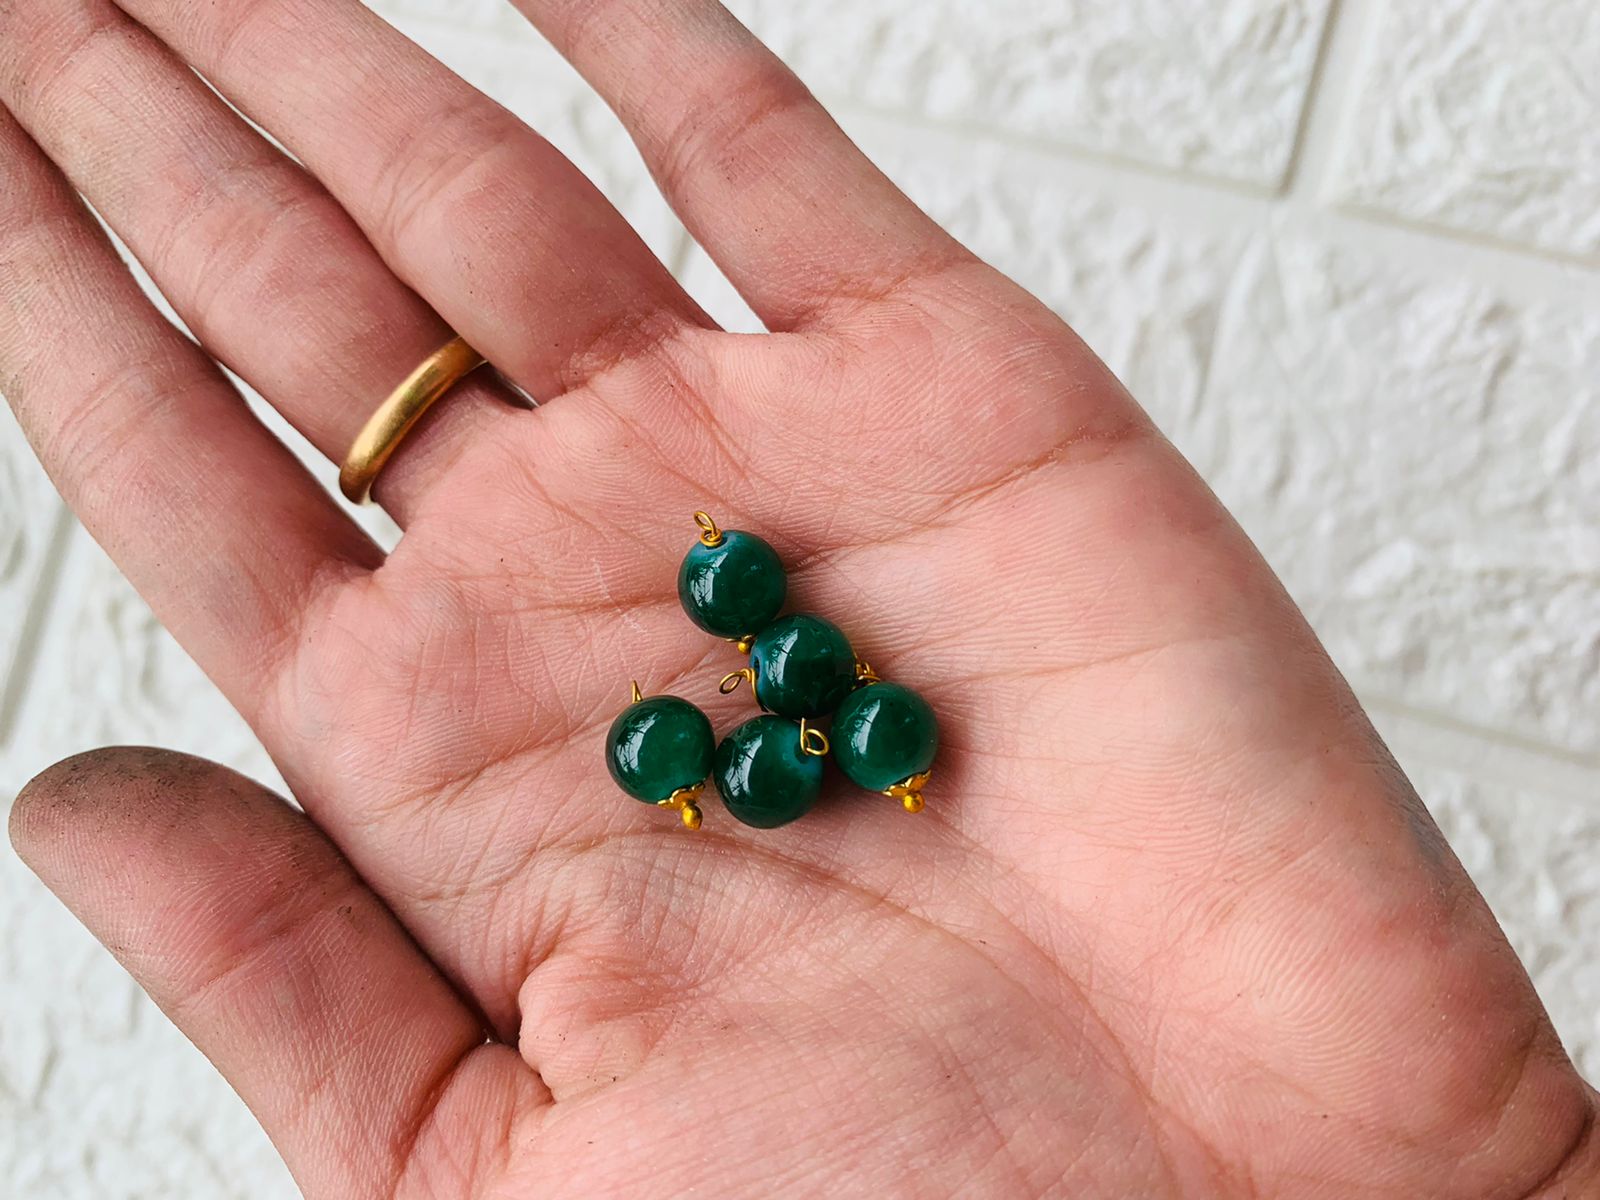 Mini beads